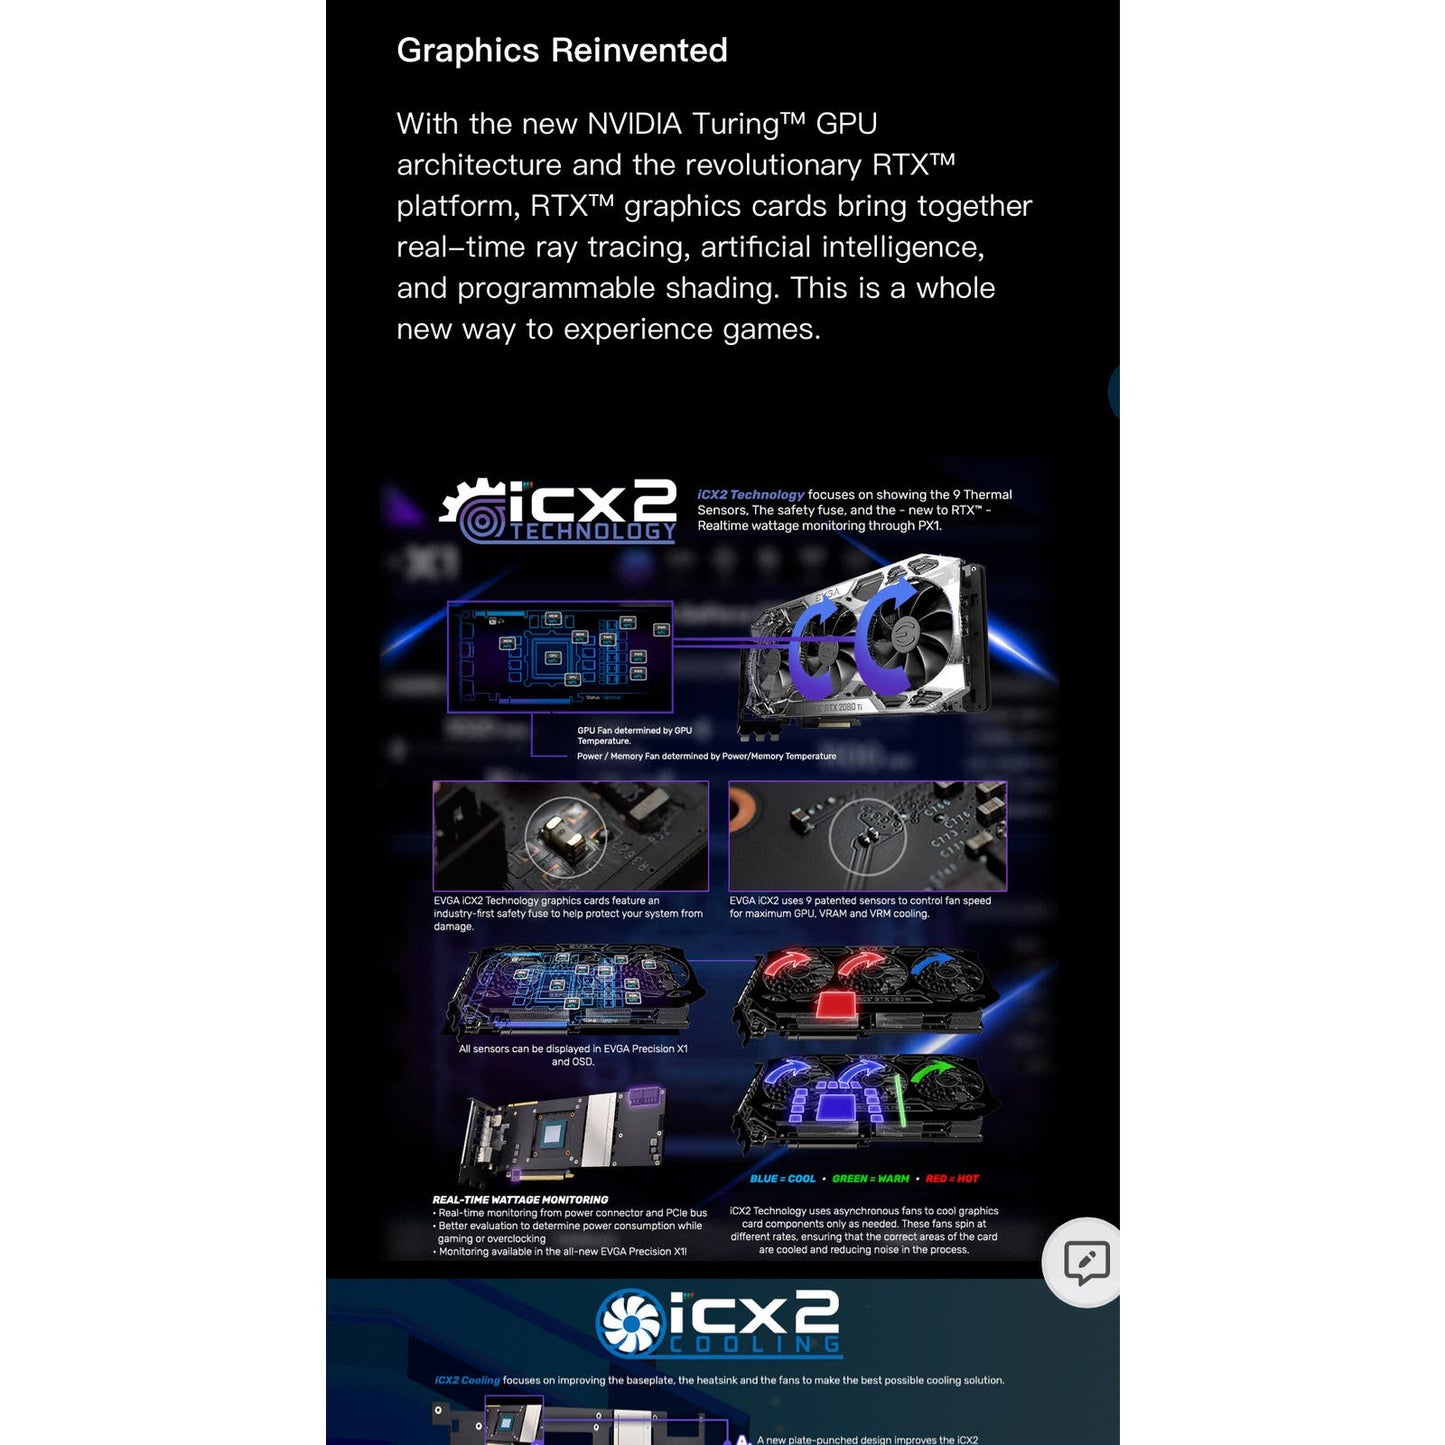 EVGA GeForce RTX 2070 Super FTW3 Ultra, Overclocked, Triple + iCX2, 65C Gaming, RGB, Video Card